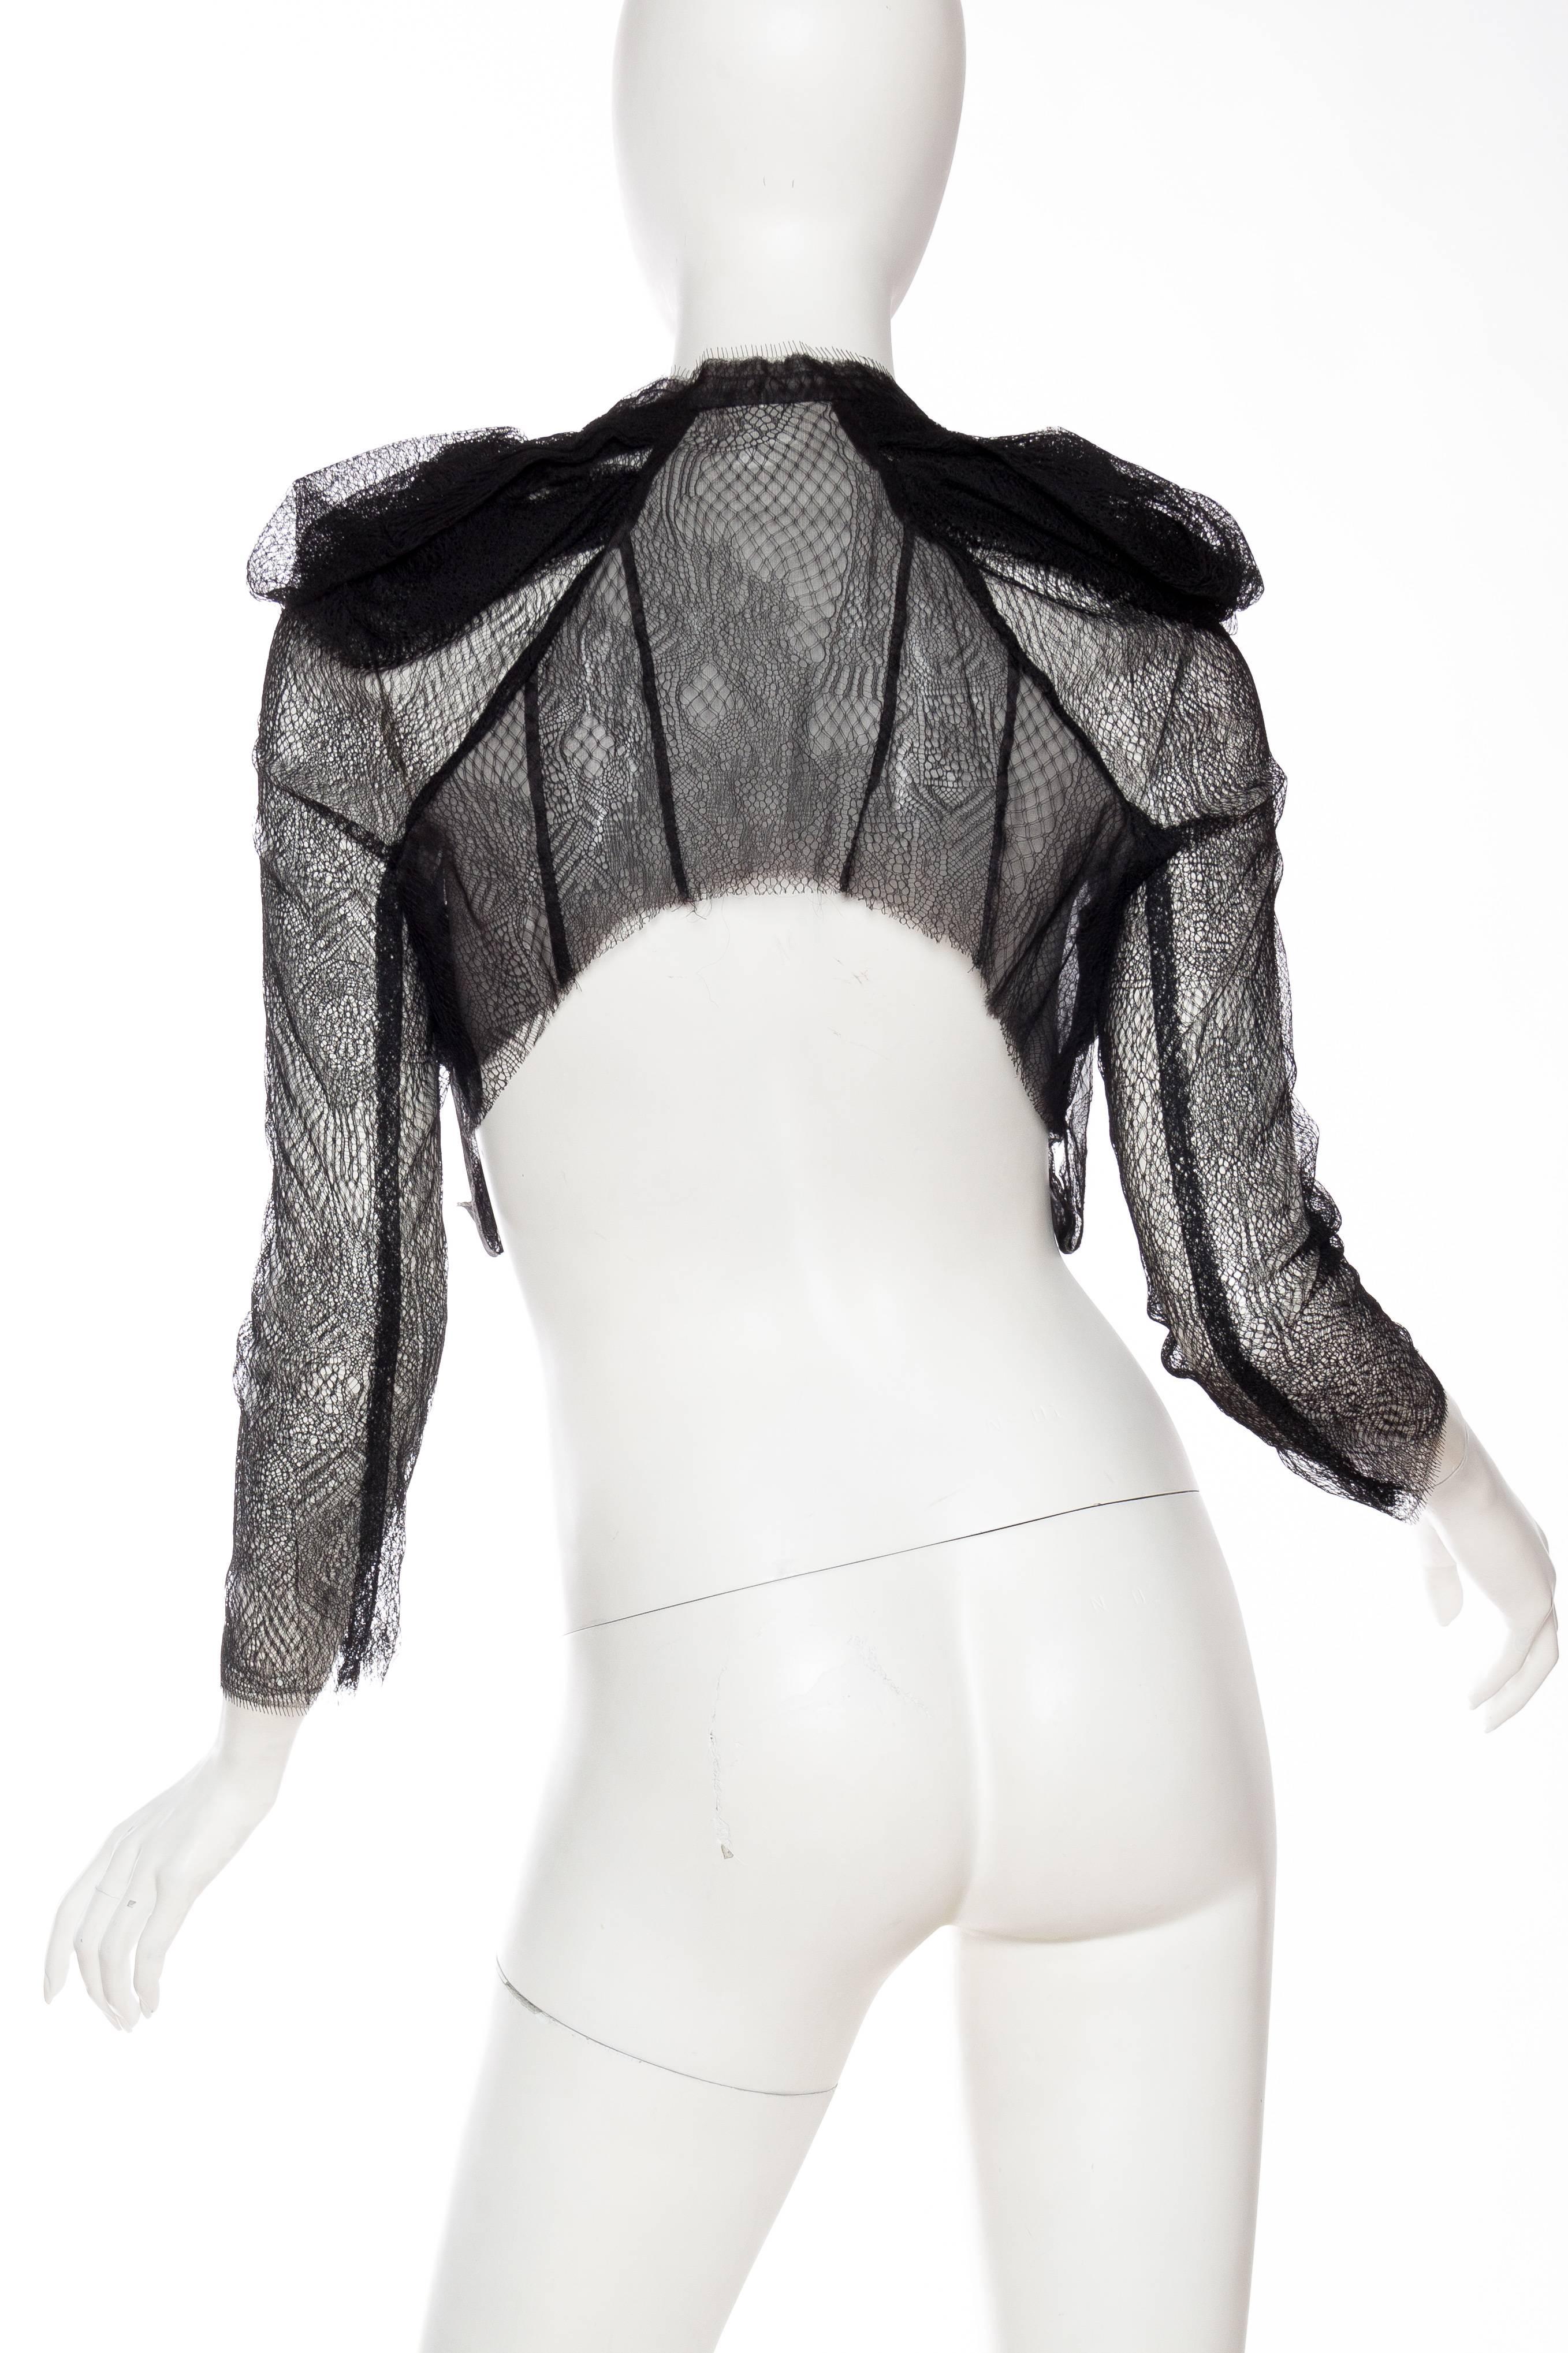 Black Silk and Lace Deconstructed Bolero Shrug by Sharon Wauchob